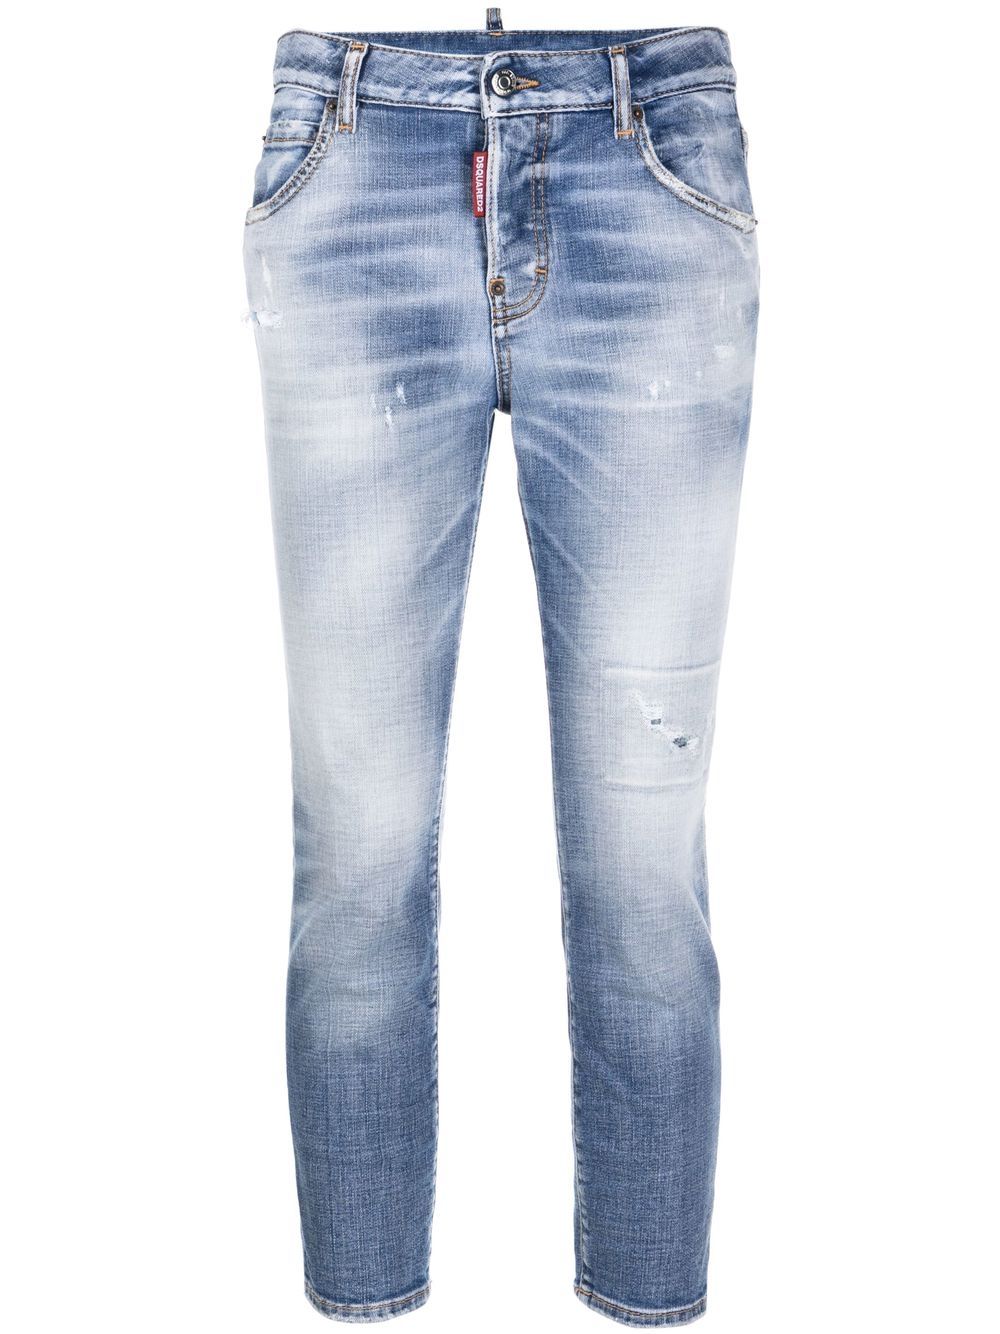 Dsquared2 Cropped-Jeans in Distressed-Optik - Blau von Dsquared2